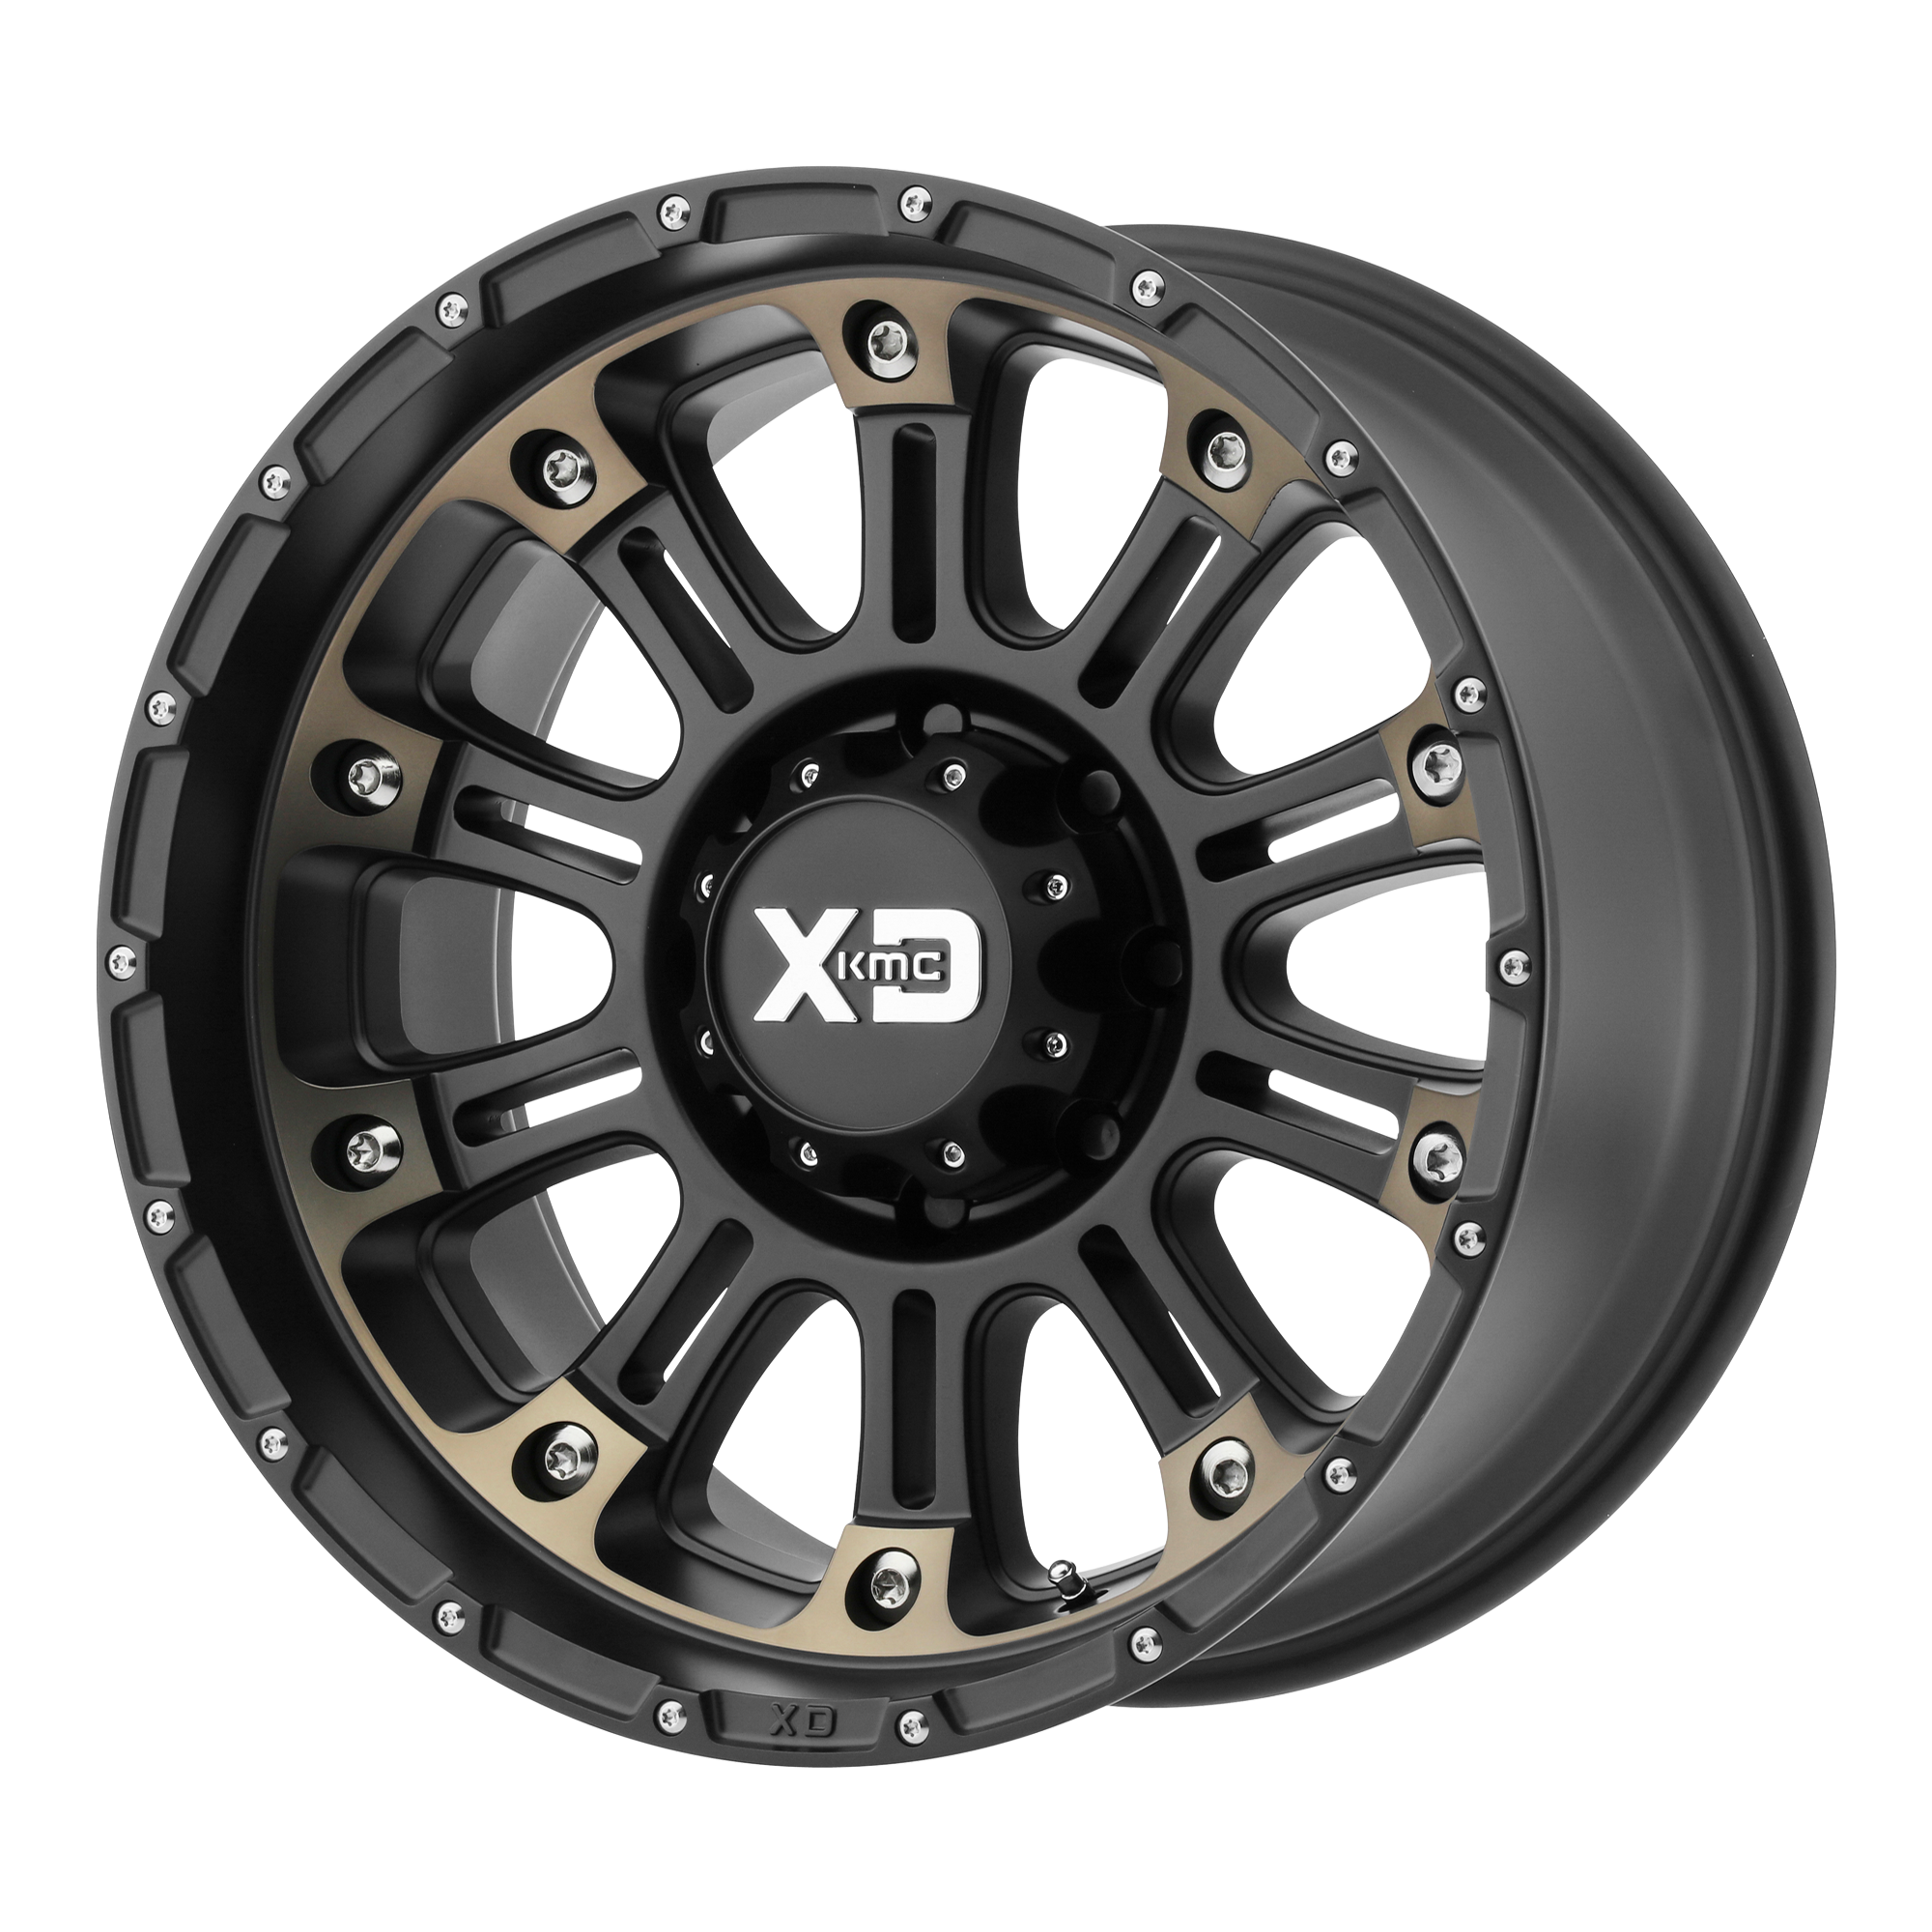 HOSS II 17x9 6x135.00 SATIN BLACK MACH W/ DARK TINT (18 mm) - Tires and Engine Performance